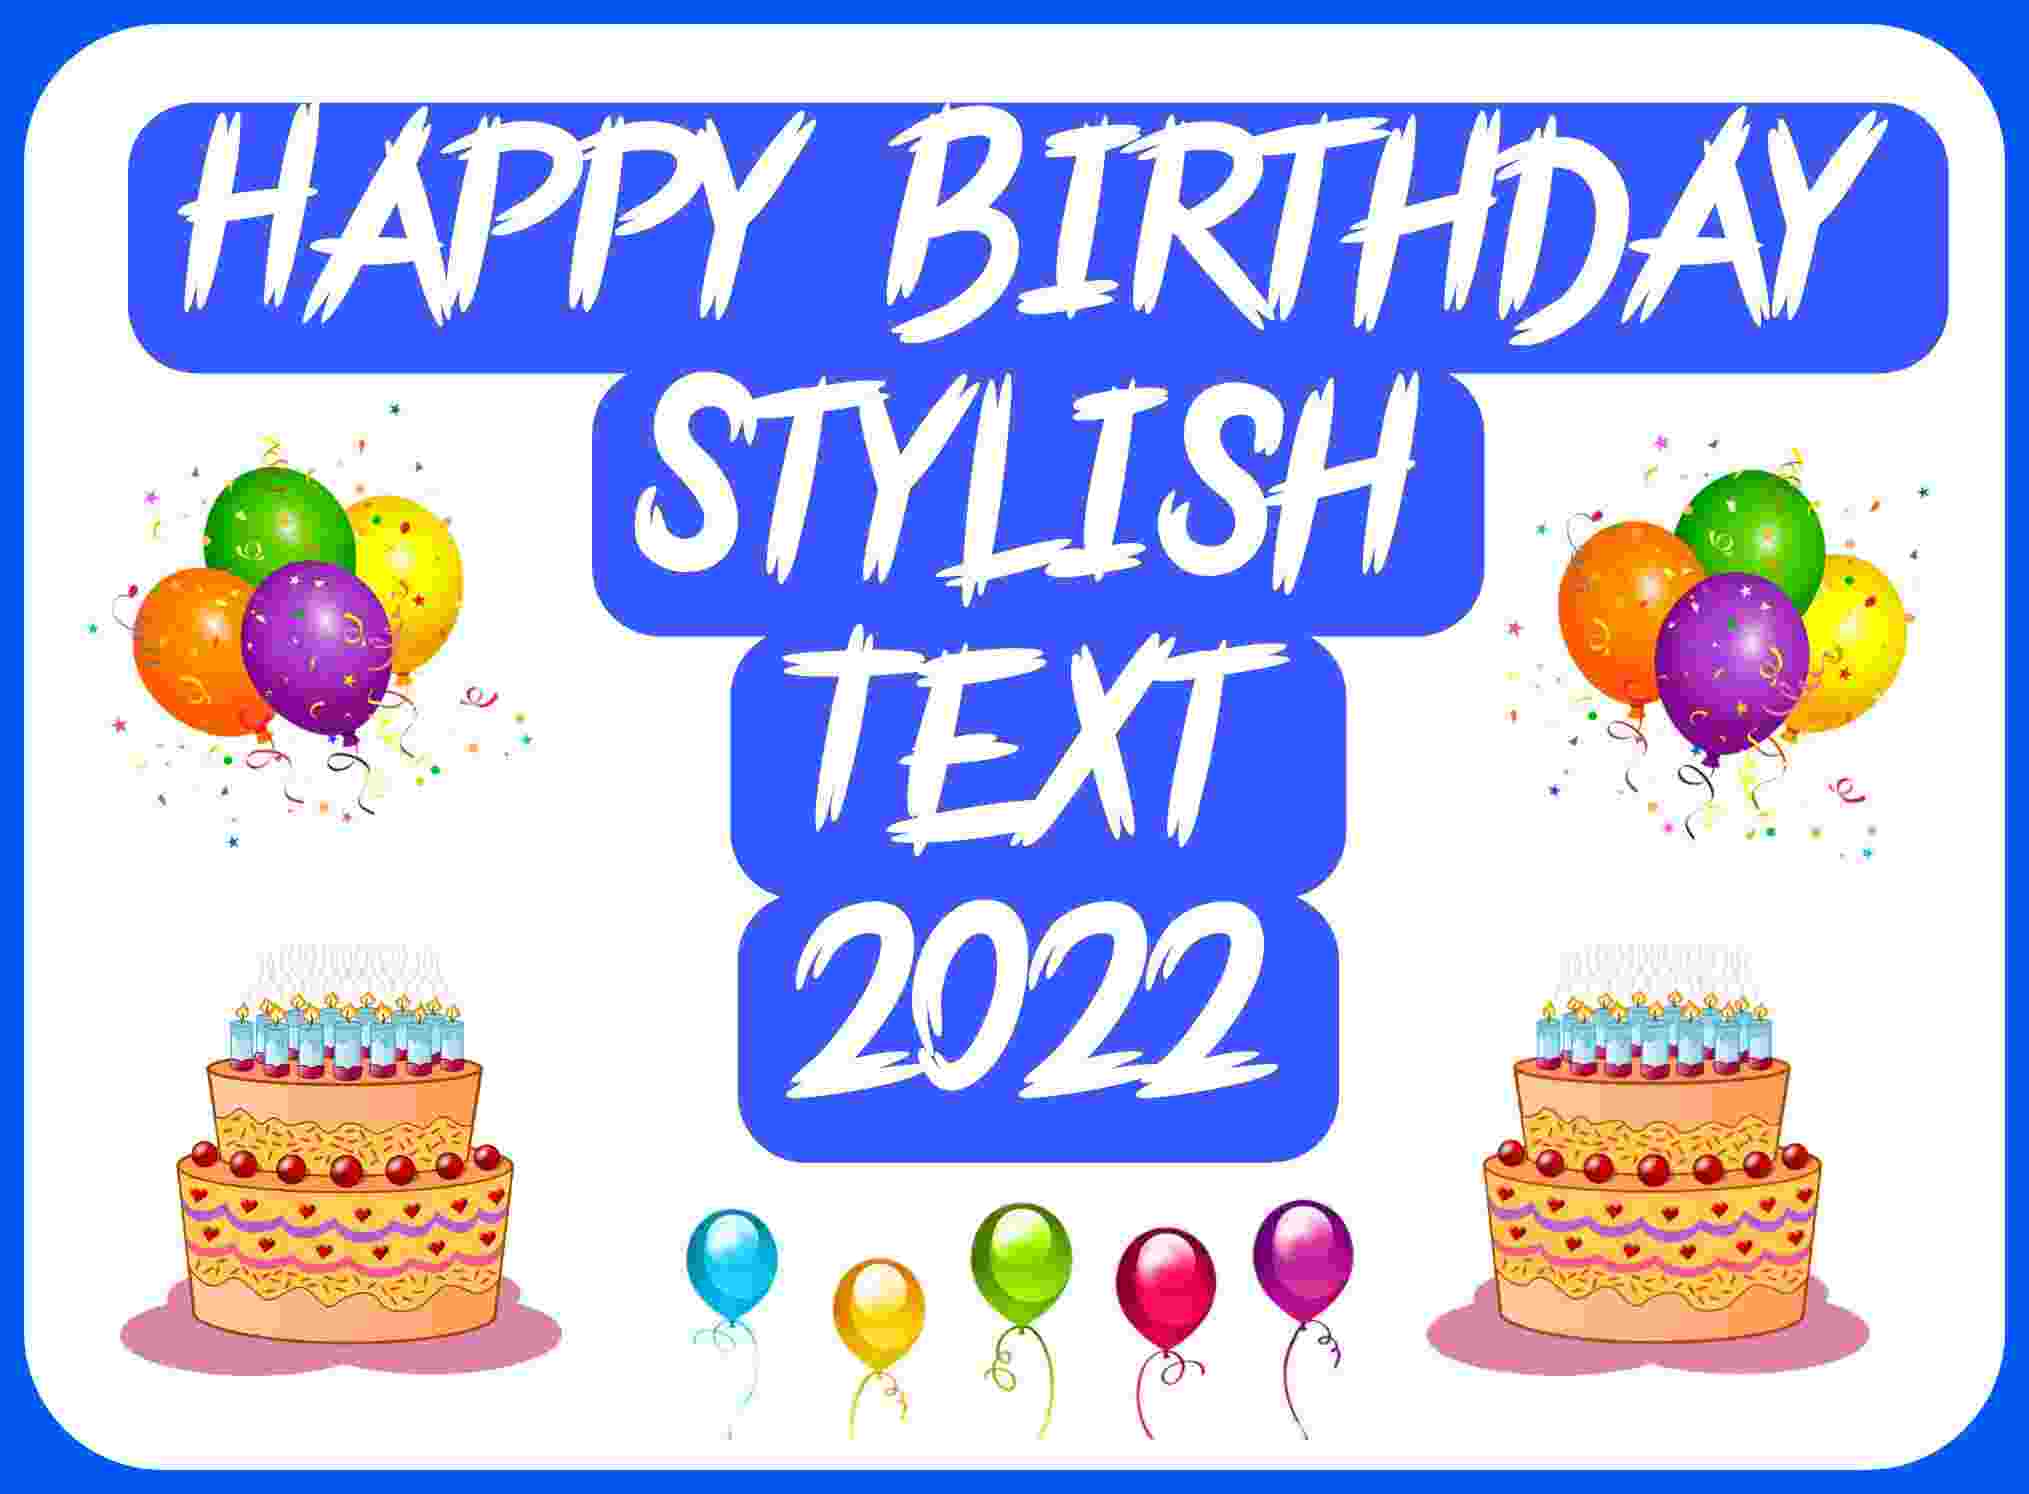 Happy Birthday Stylish Text | Happy Birthday Stylish Text Copy And Paste